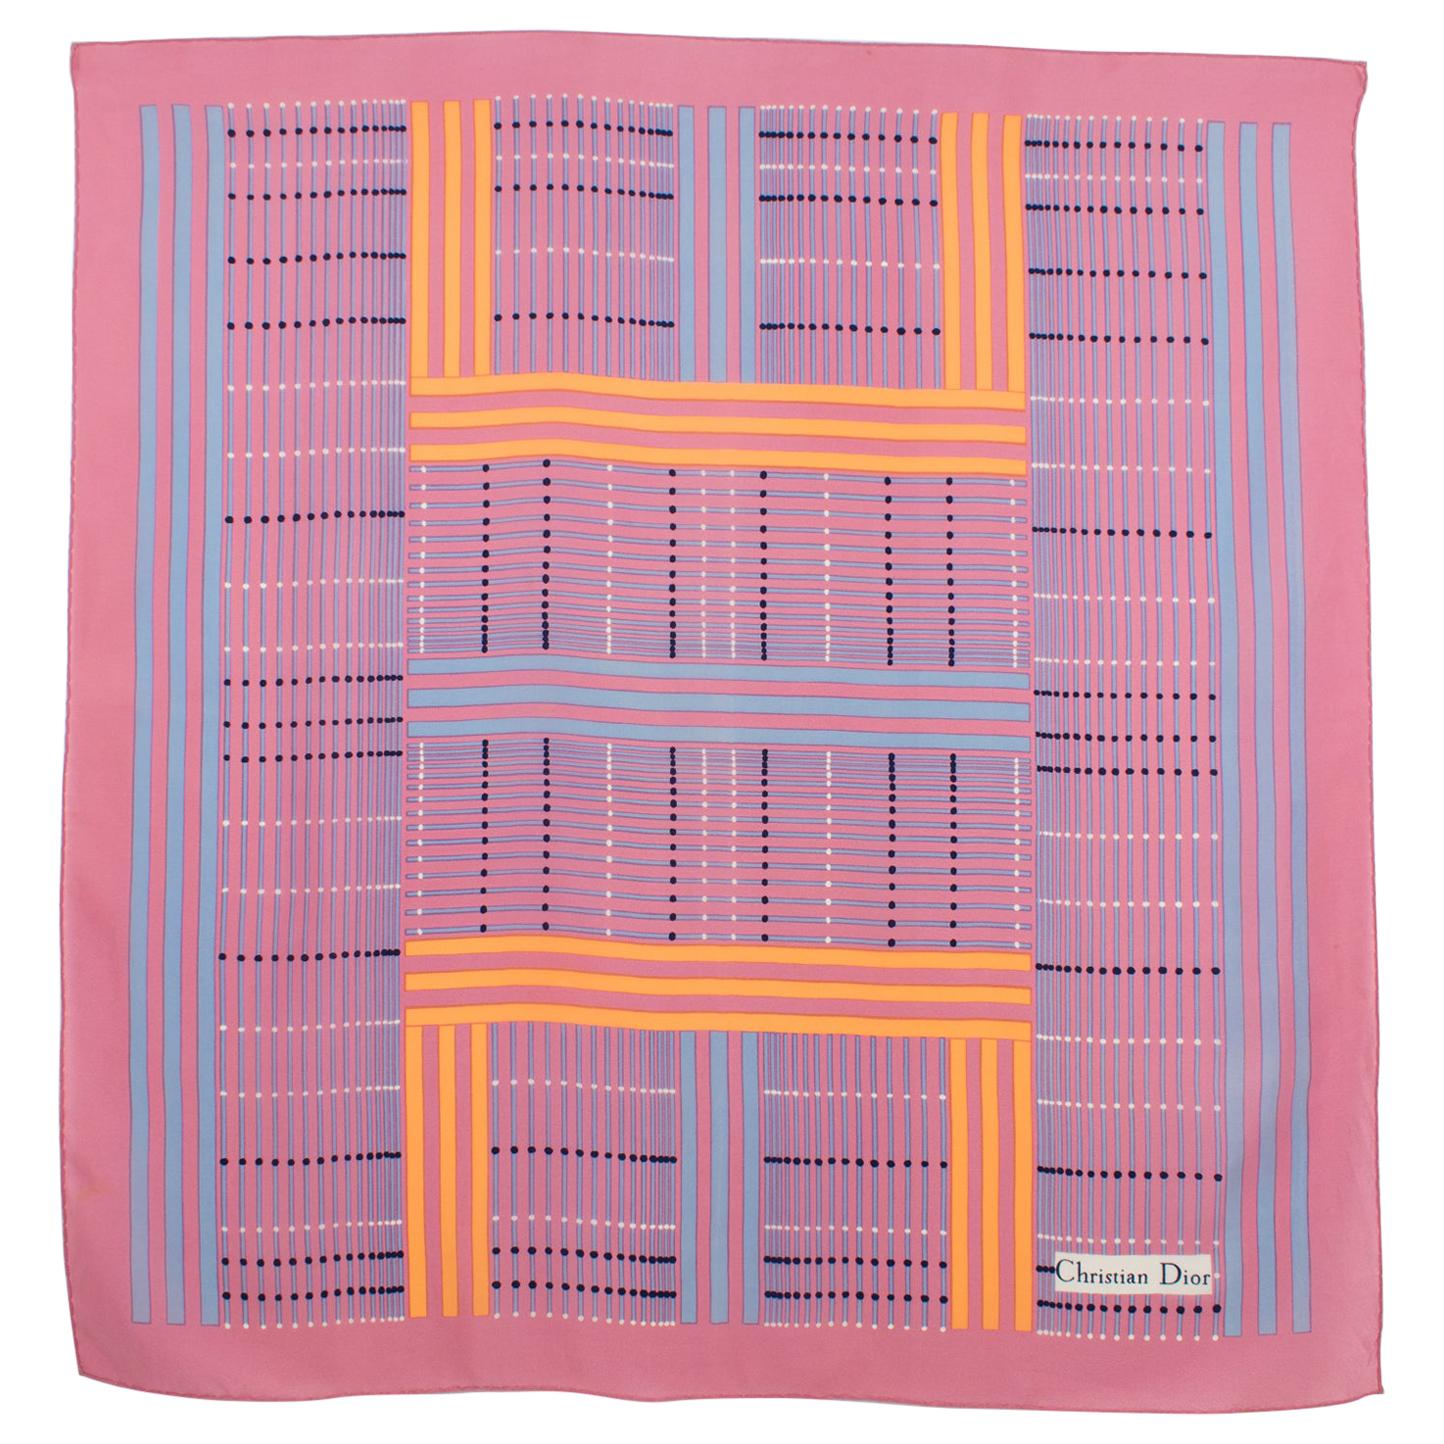 Christian Dior Paris Silk Scarf Geometric Print in Pink and Orange